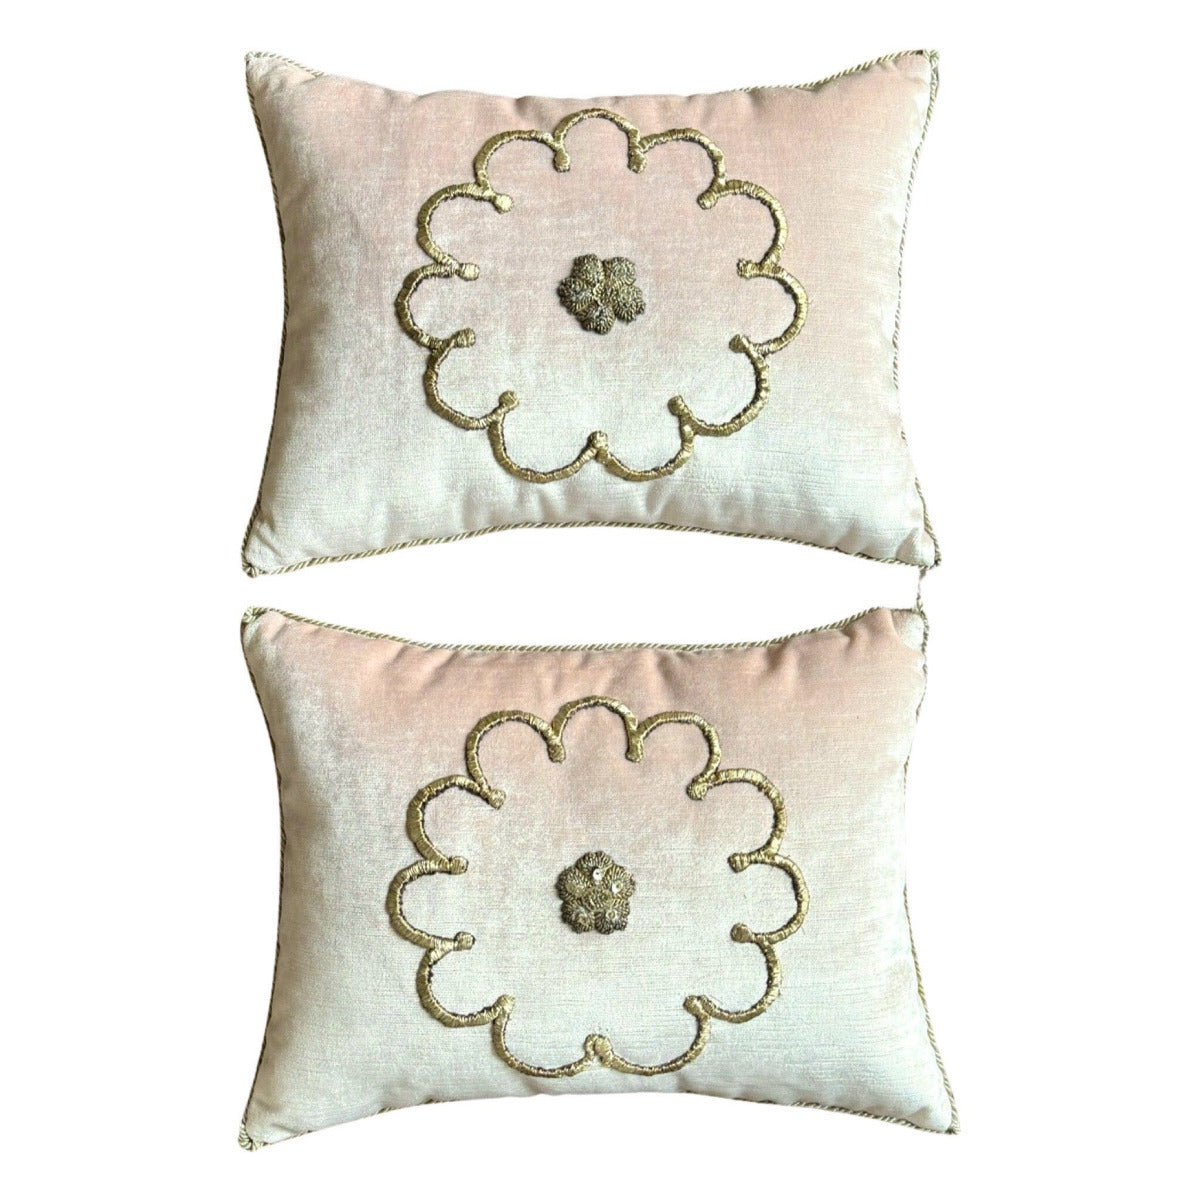 Antique Ottoman Empire Raised Silver Metallic Embroidery (#E022524A&B | 12 x 16") New Pillows B. Viz Design 